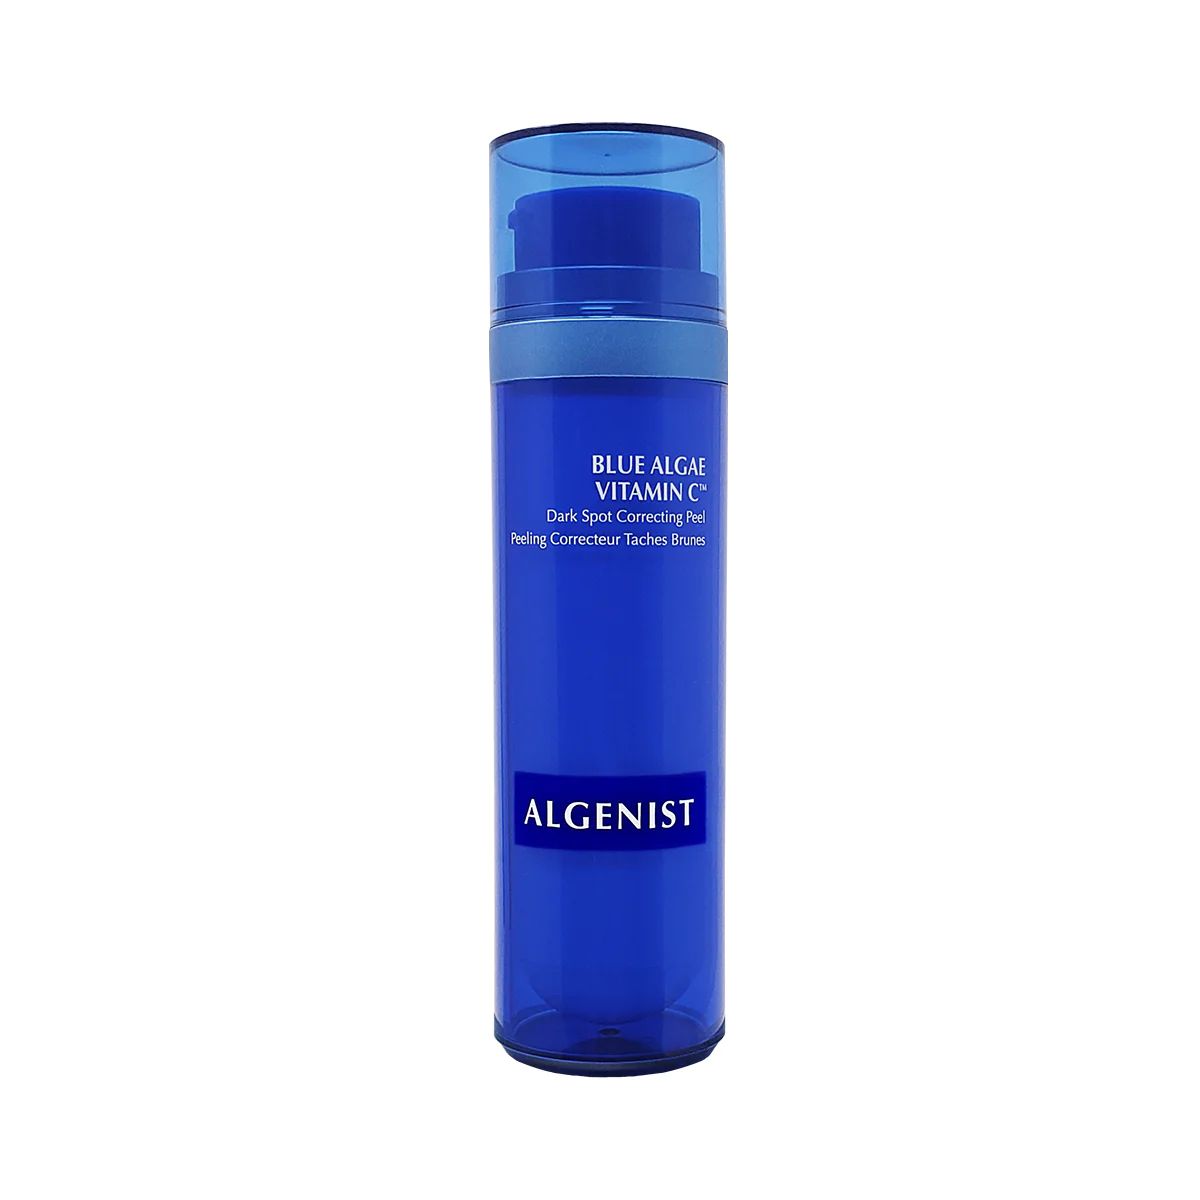 BLUE ALGAE VITAMIN C™ Dark Spot Correcting Peel | Algenist